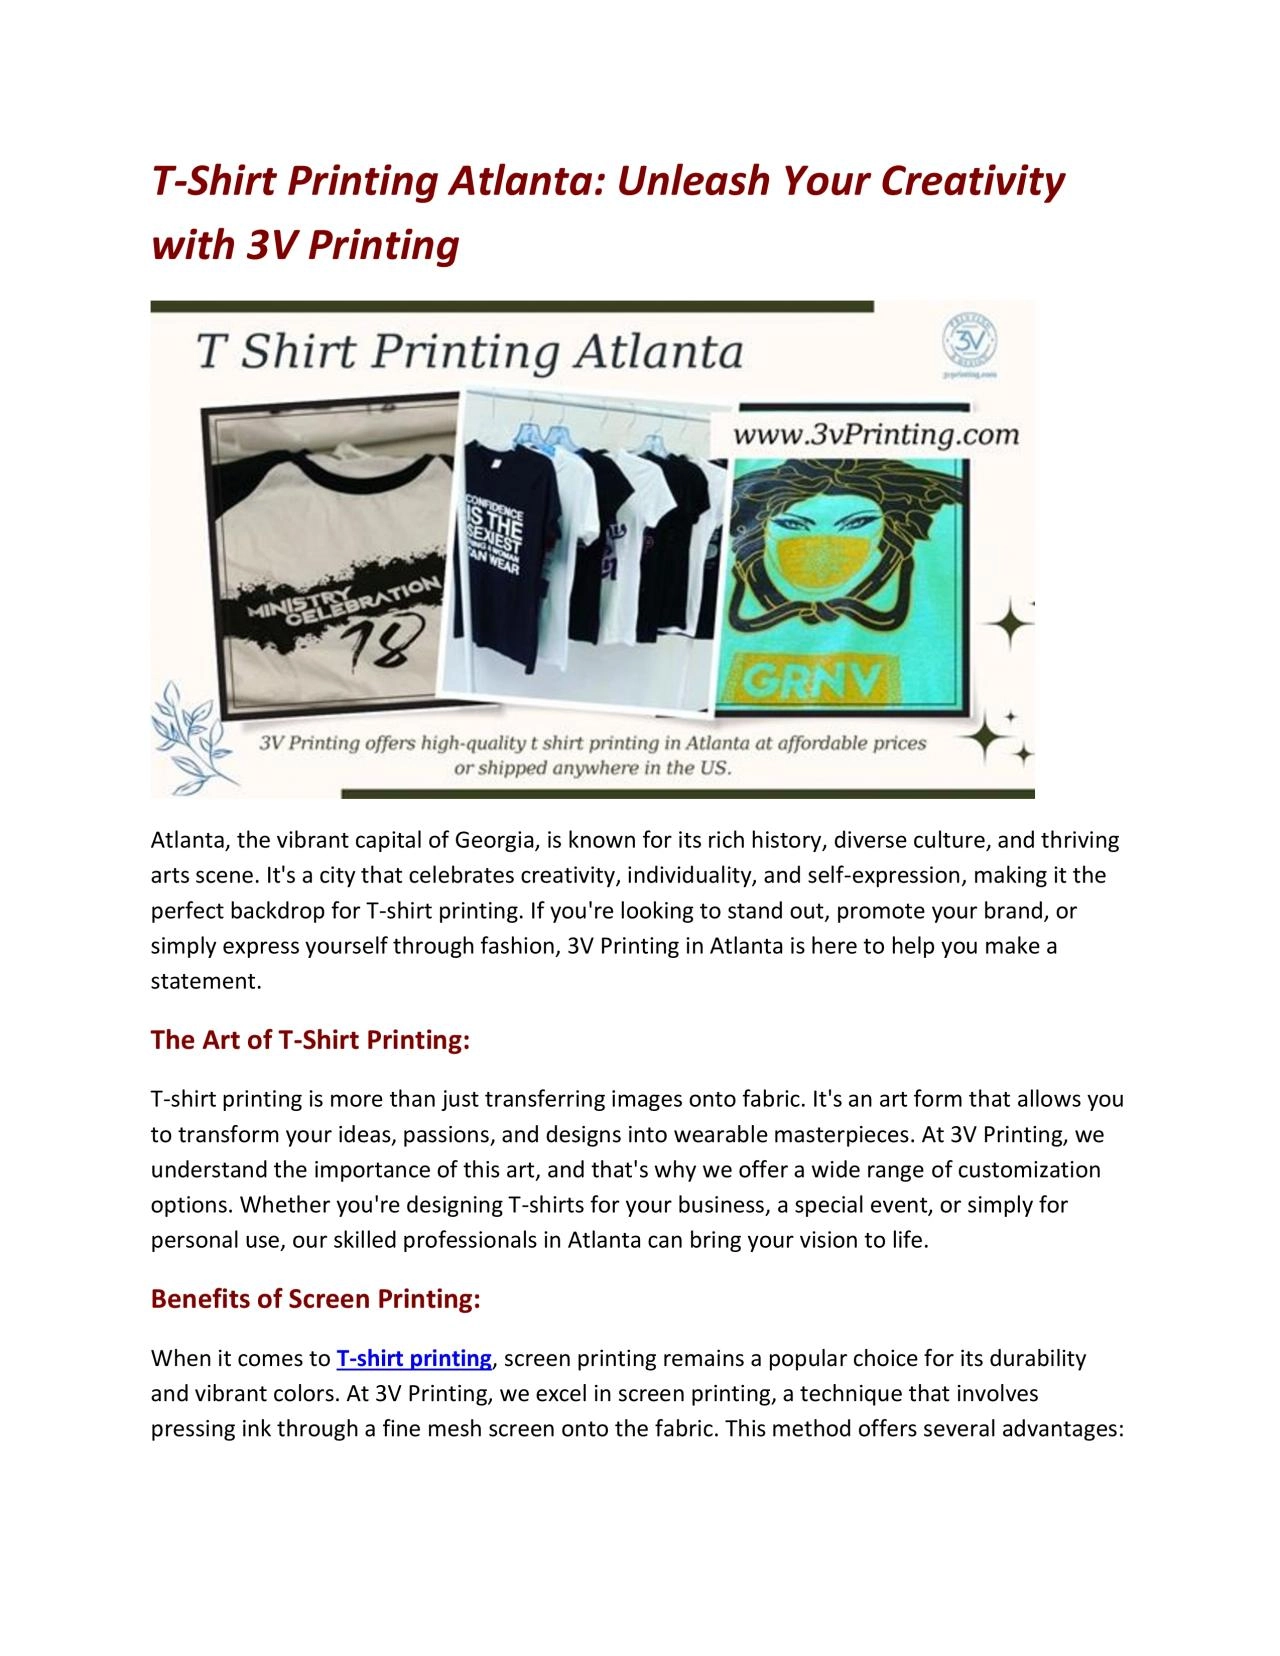 T-Shirt Printing Atlanta: Unleash Your Creativity with 3V Printing